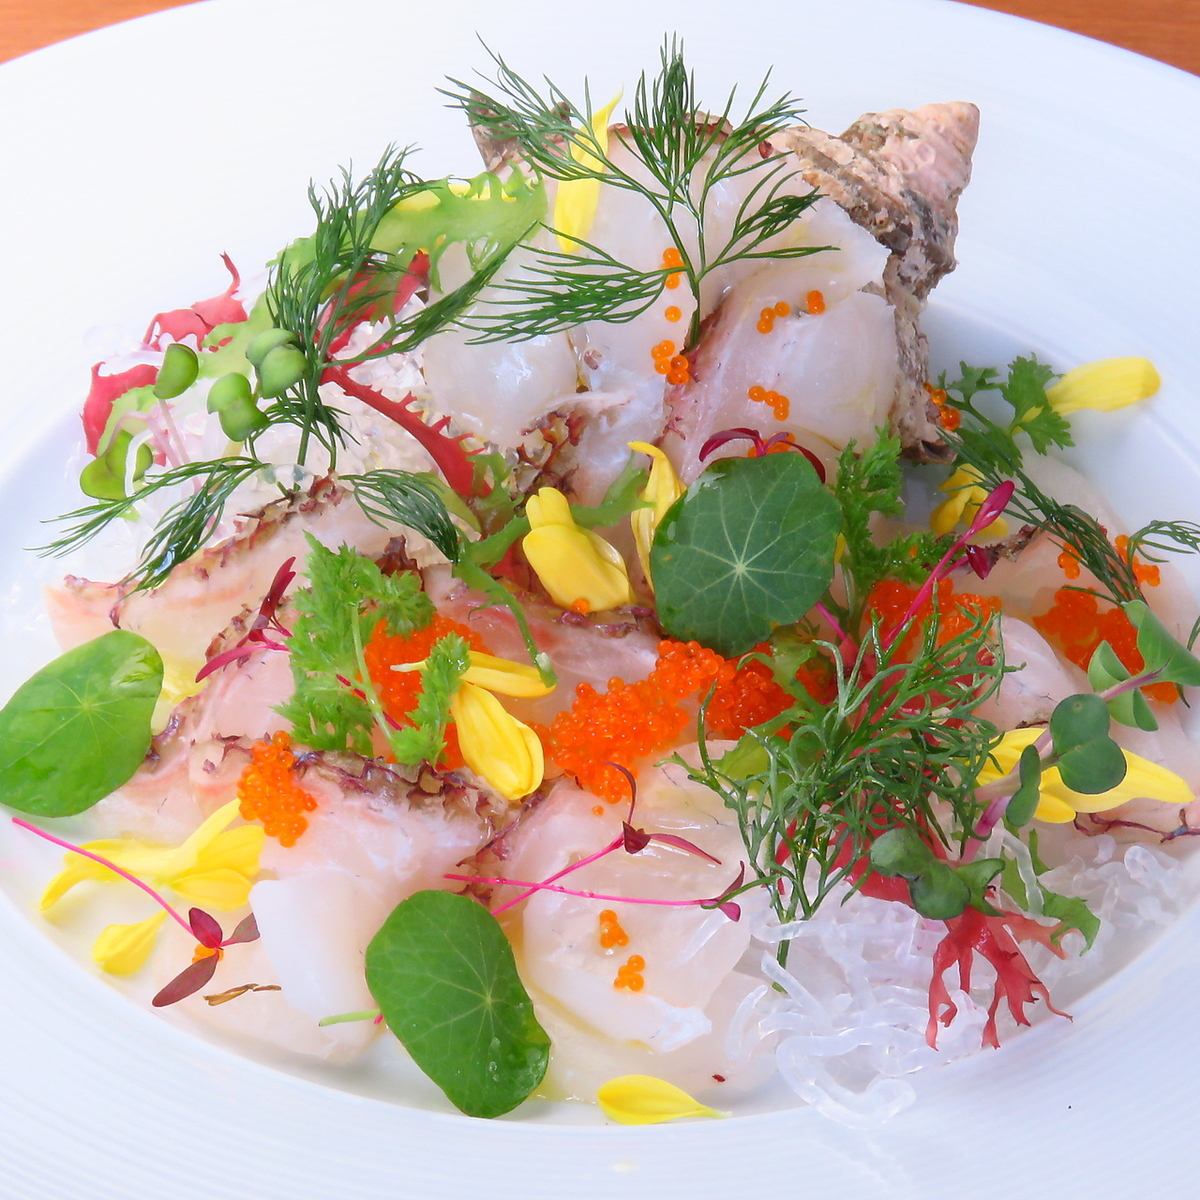 You can taste carpaccio using fresh fish and seasonal fish